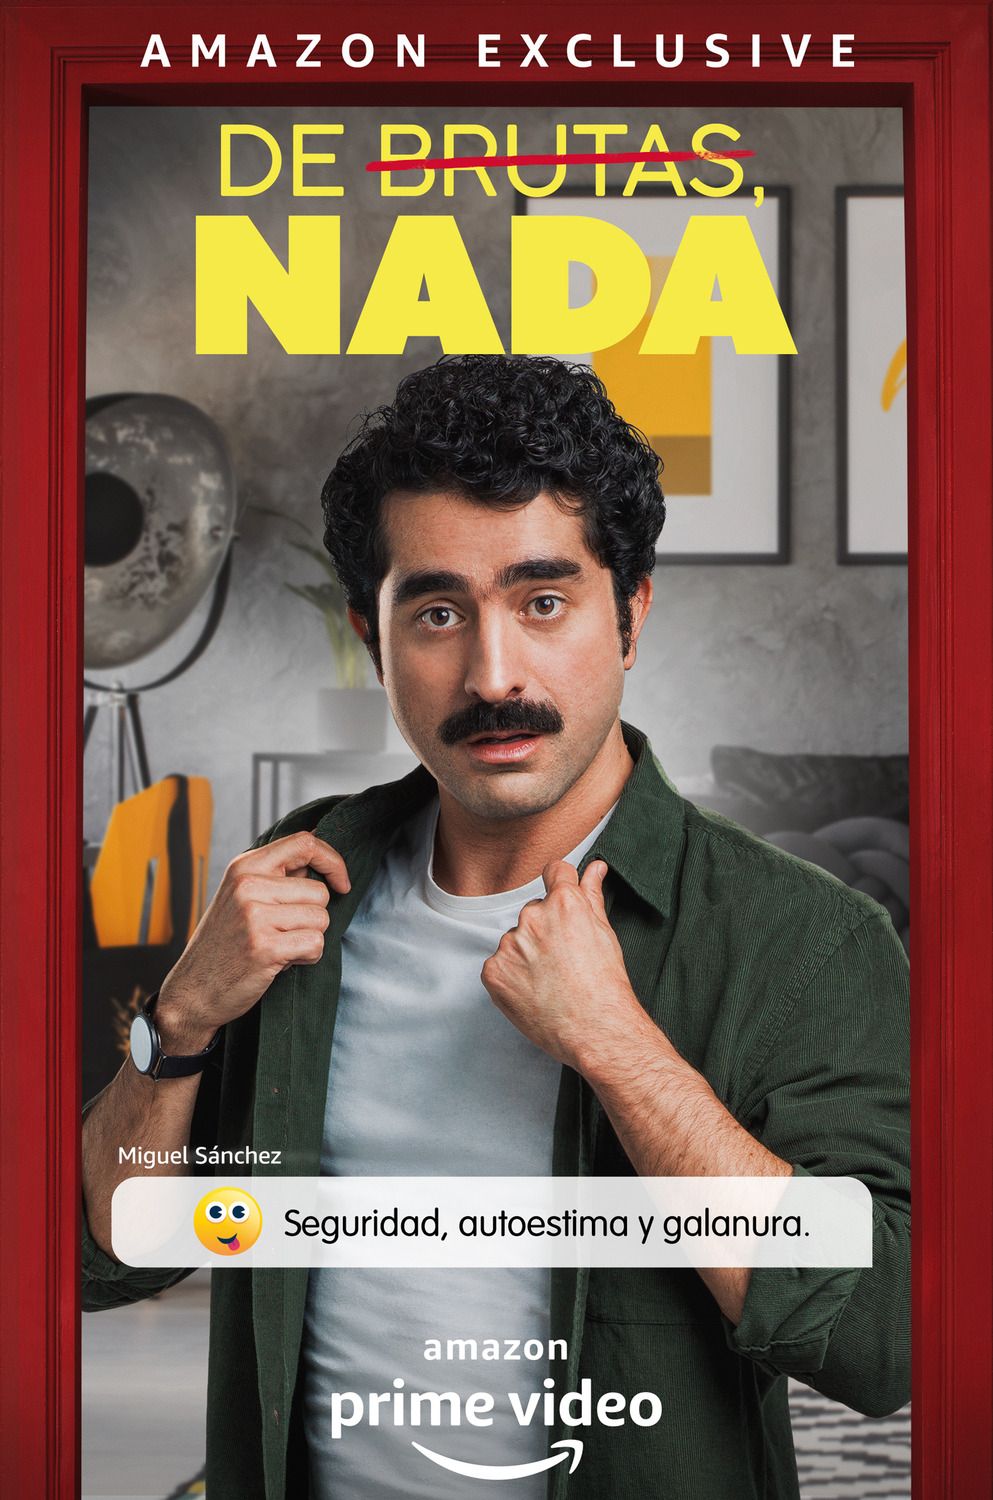 Extra Large TV Poster Image for De Brutas, Nada (#10 of 22)